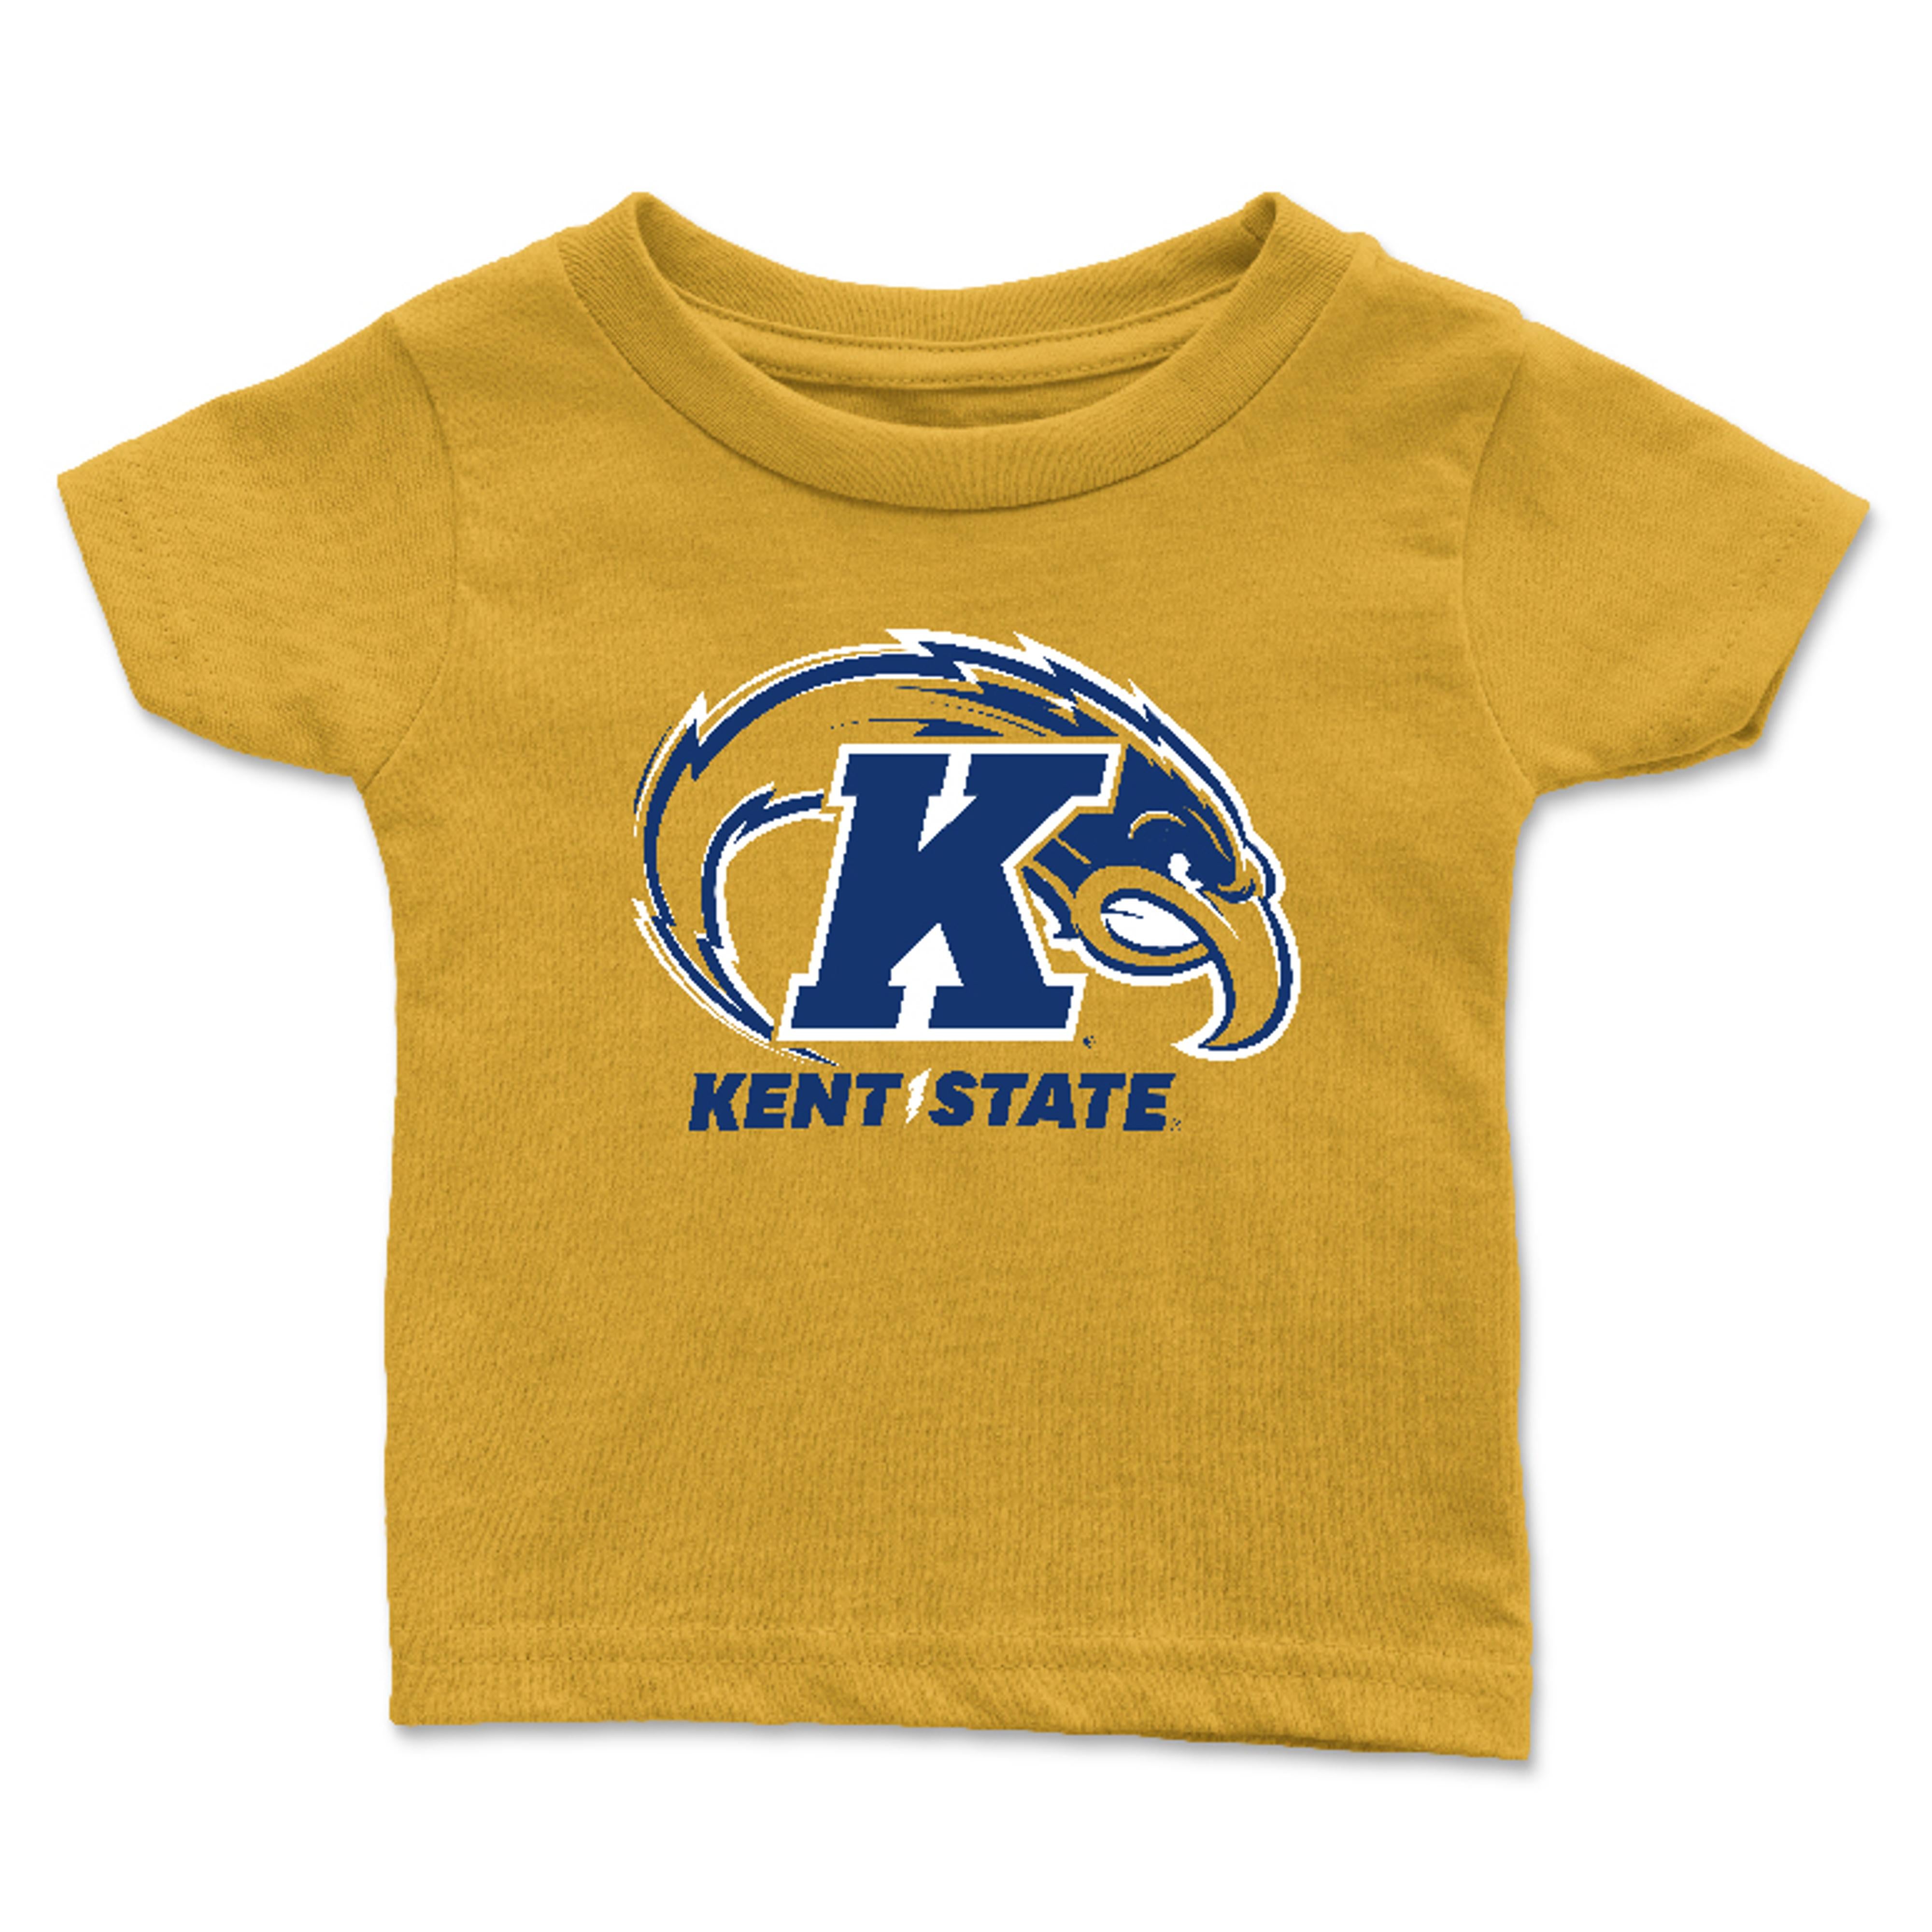 2c Kent State Gold  Infant T-Shirt